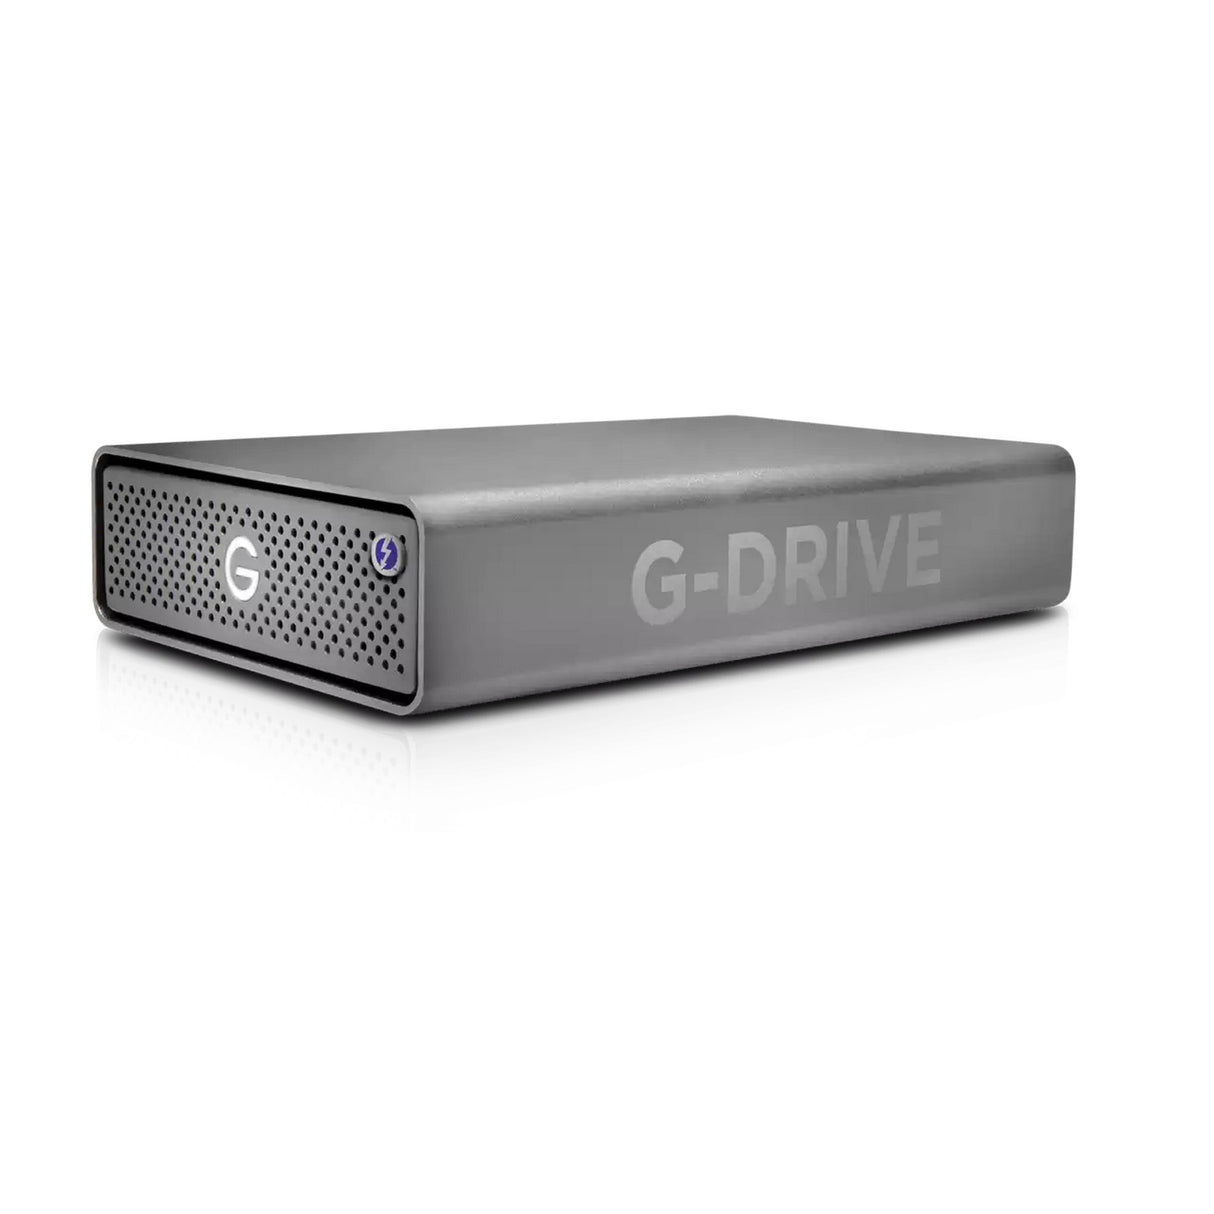 SanDisk G-DRIVE PRO Studio SSD External Drive, 7.68TB